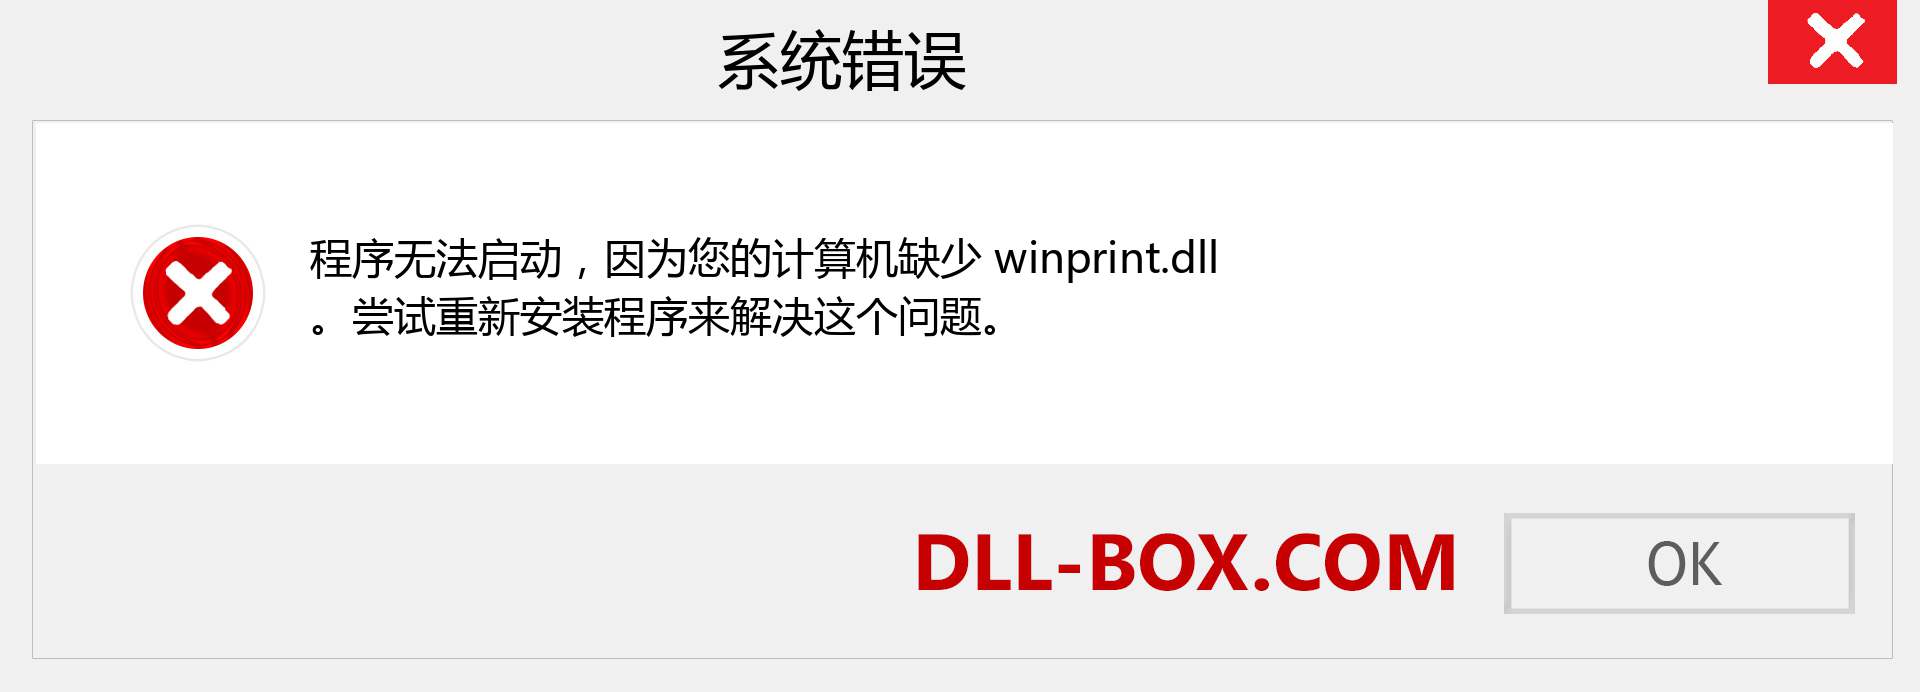 winprint.dll 文件丢失？。 适用于 Windows 7、8、10 的下载 - 修复 Windows、照片、图像上的 winprint dll 丢失错误